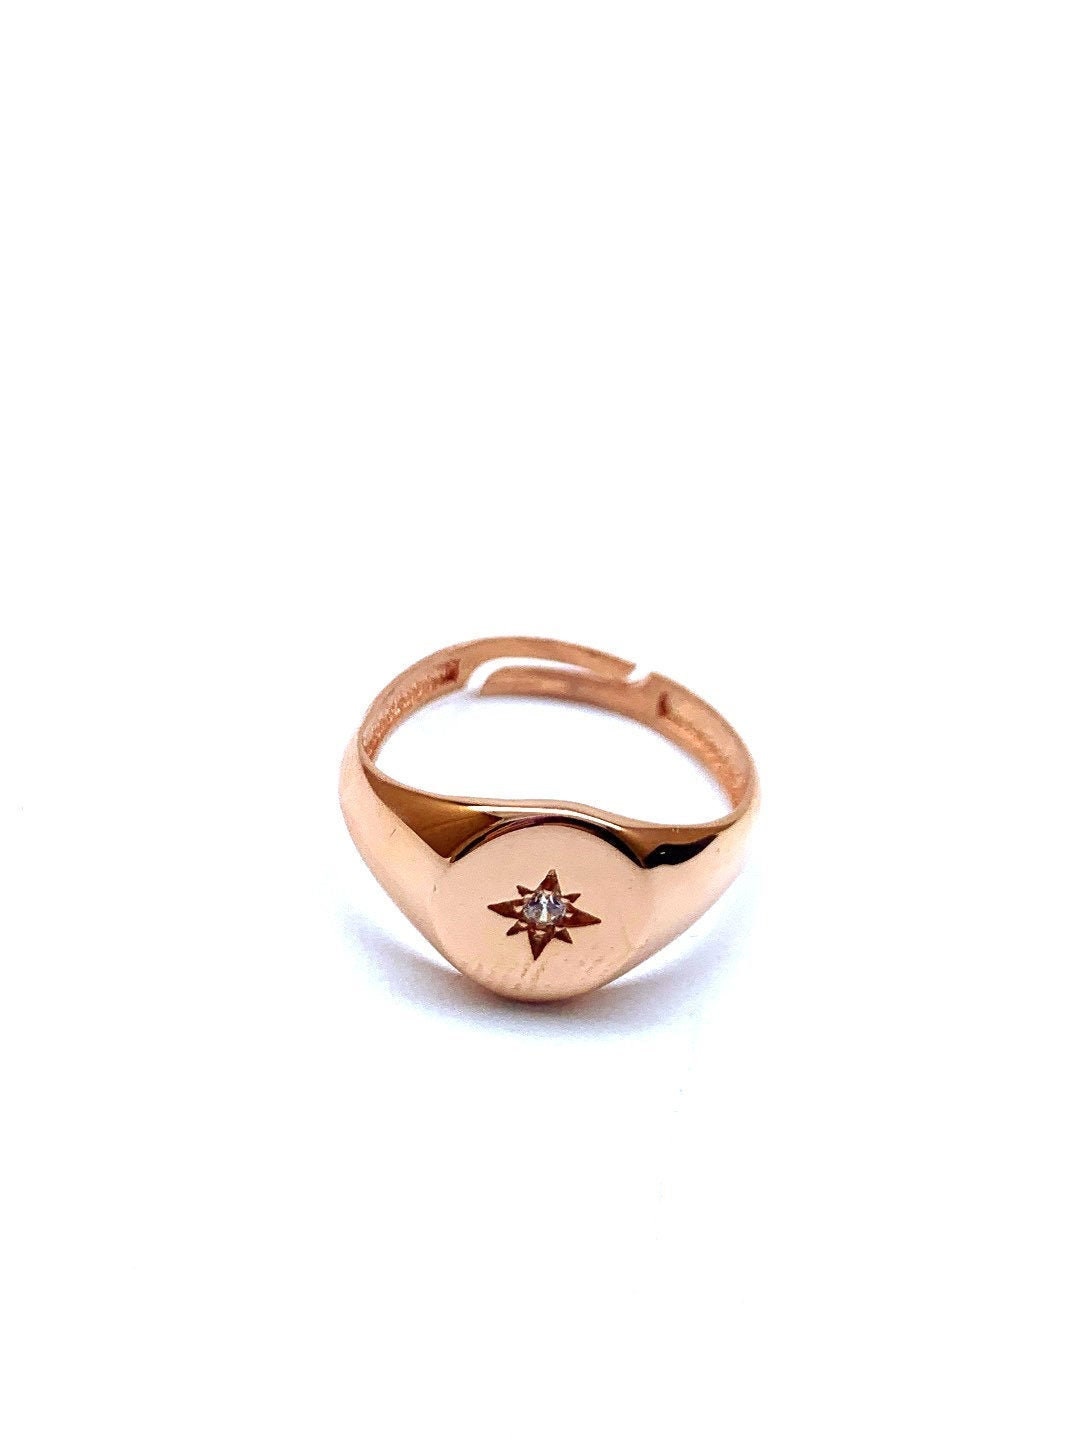 North Star Ring CZ Gemstone Little Finger Ring 925 Solid | Etsy